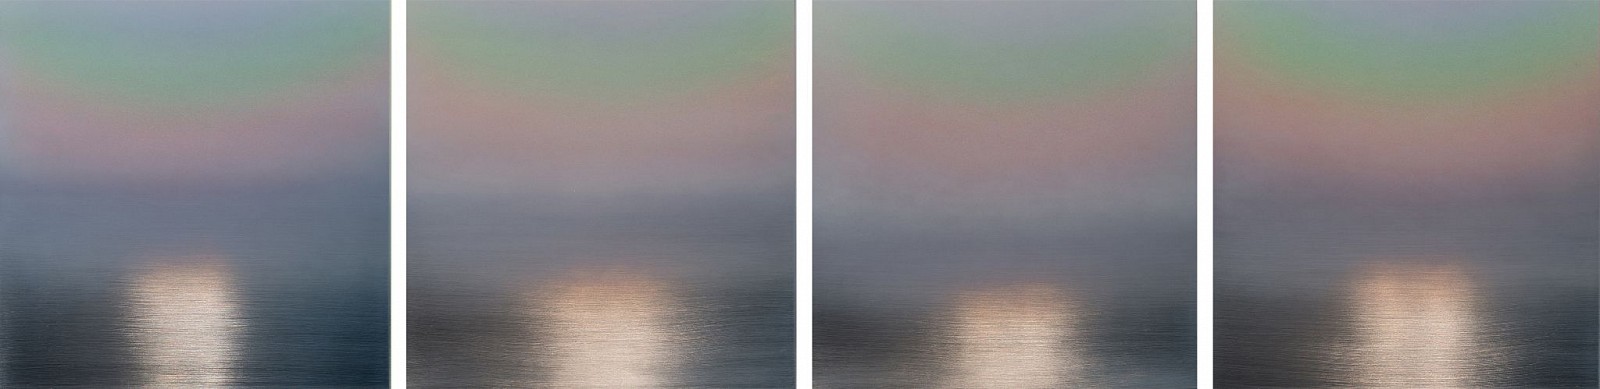 Miya Ando, Phenomena Polyptych
Pigment, Urethane, on Aluminum, 24 x 96 in.
7158